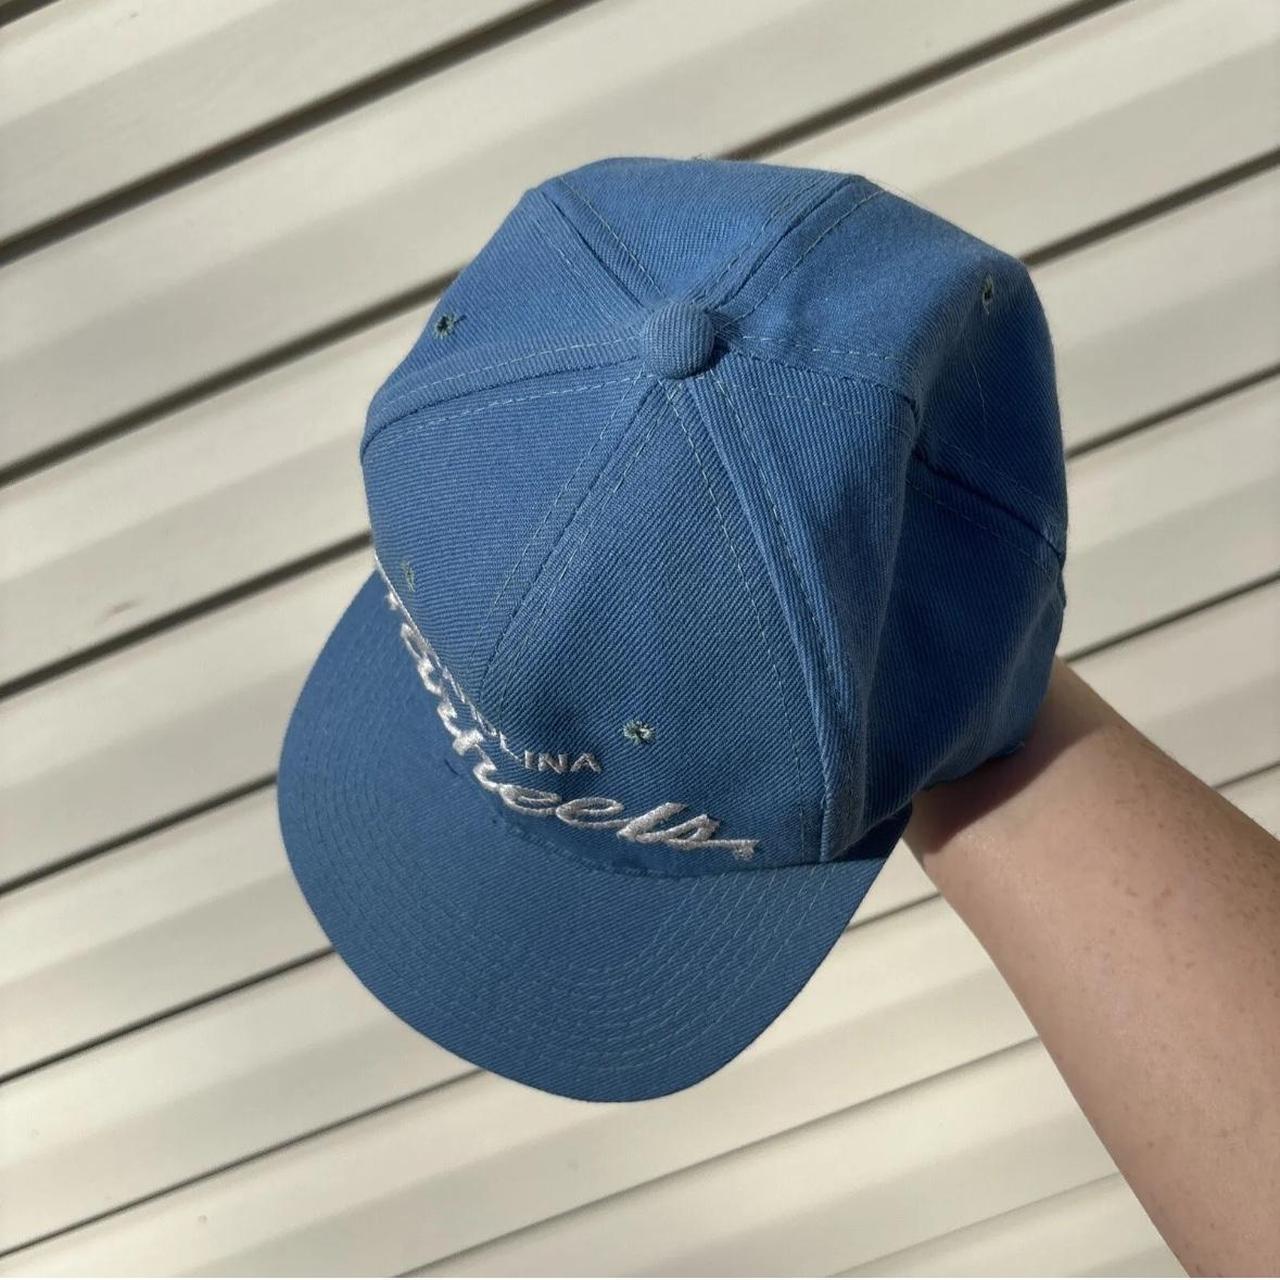 Sports Specialties Men's Blue Hat (7)